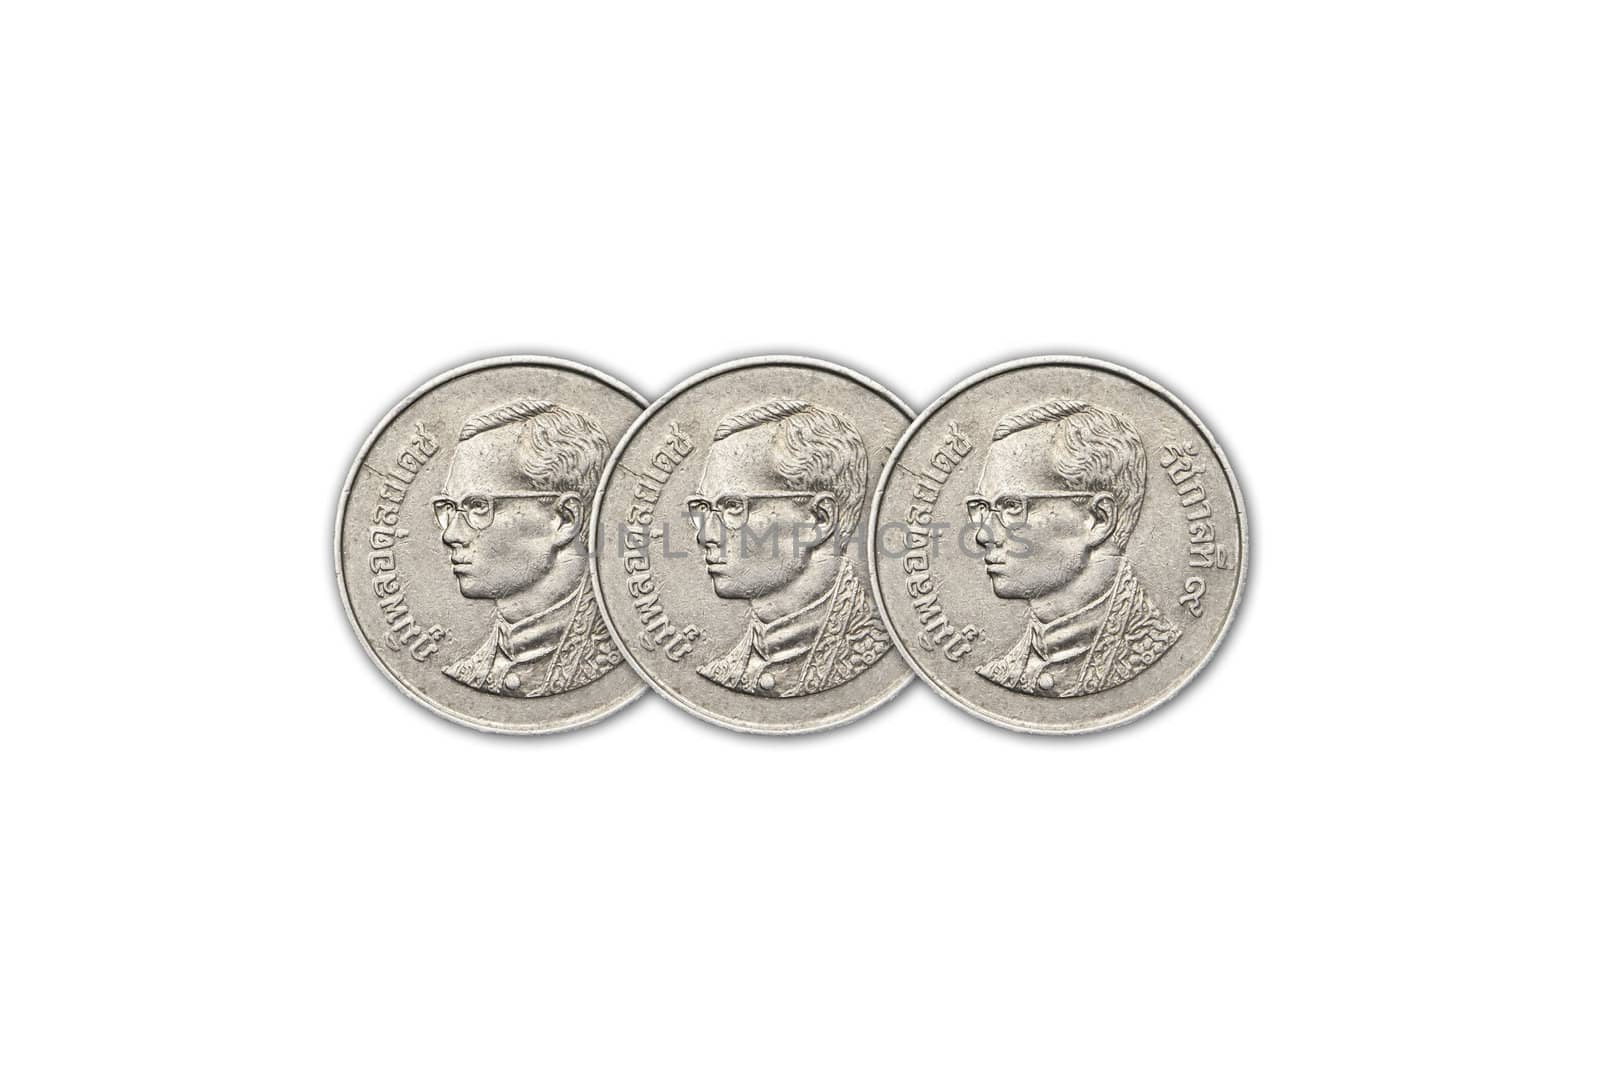 Thailand baht coins by sasilsolutions